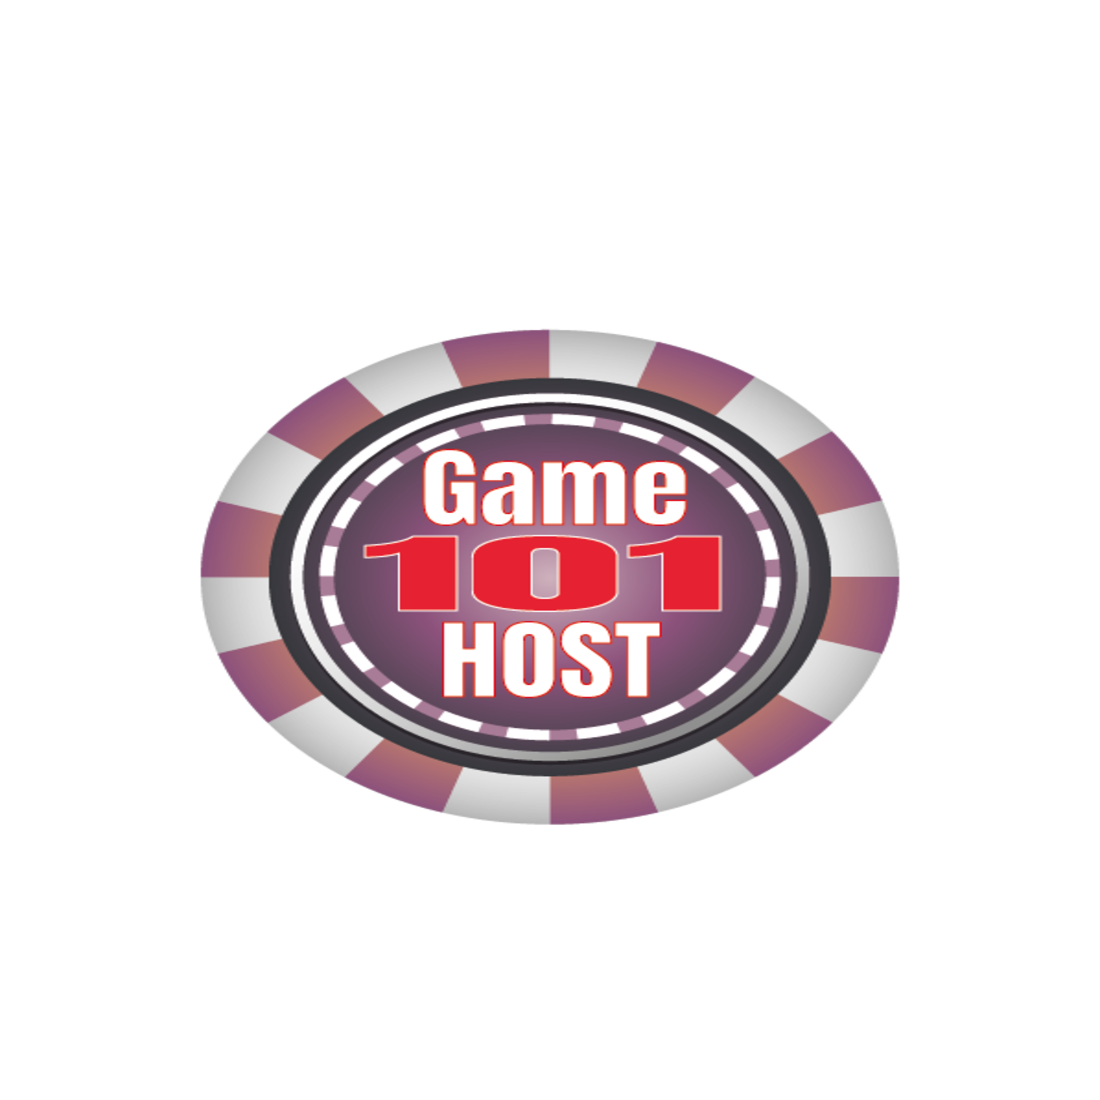 Game 101 Host Logo T-shirt Design cover image.